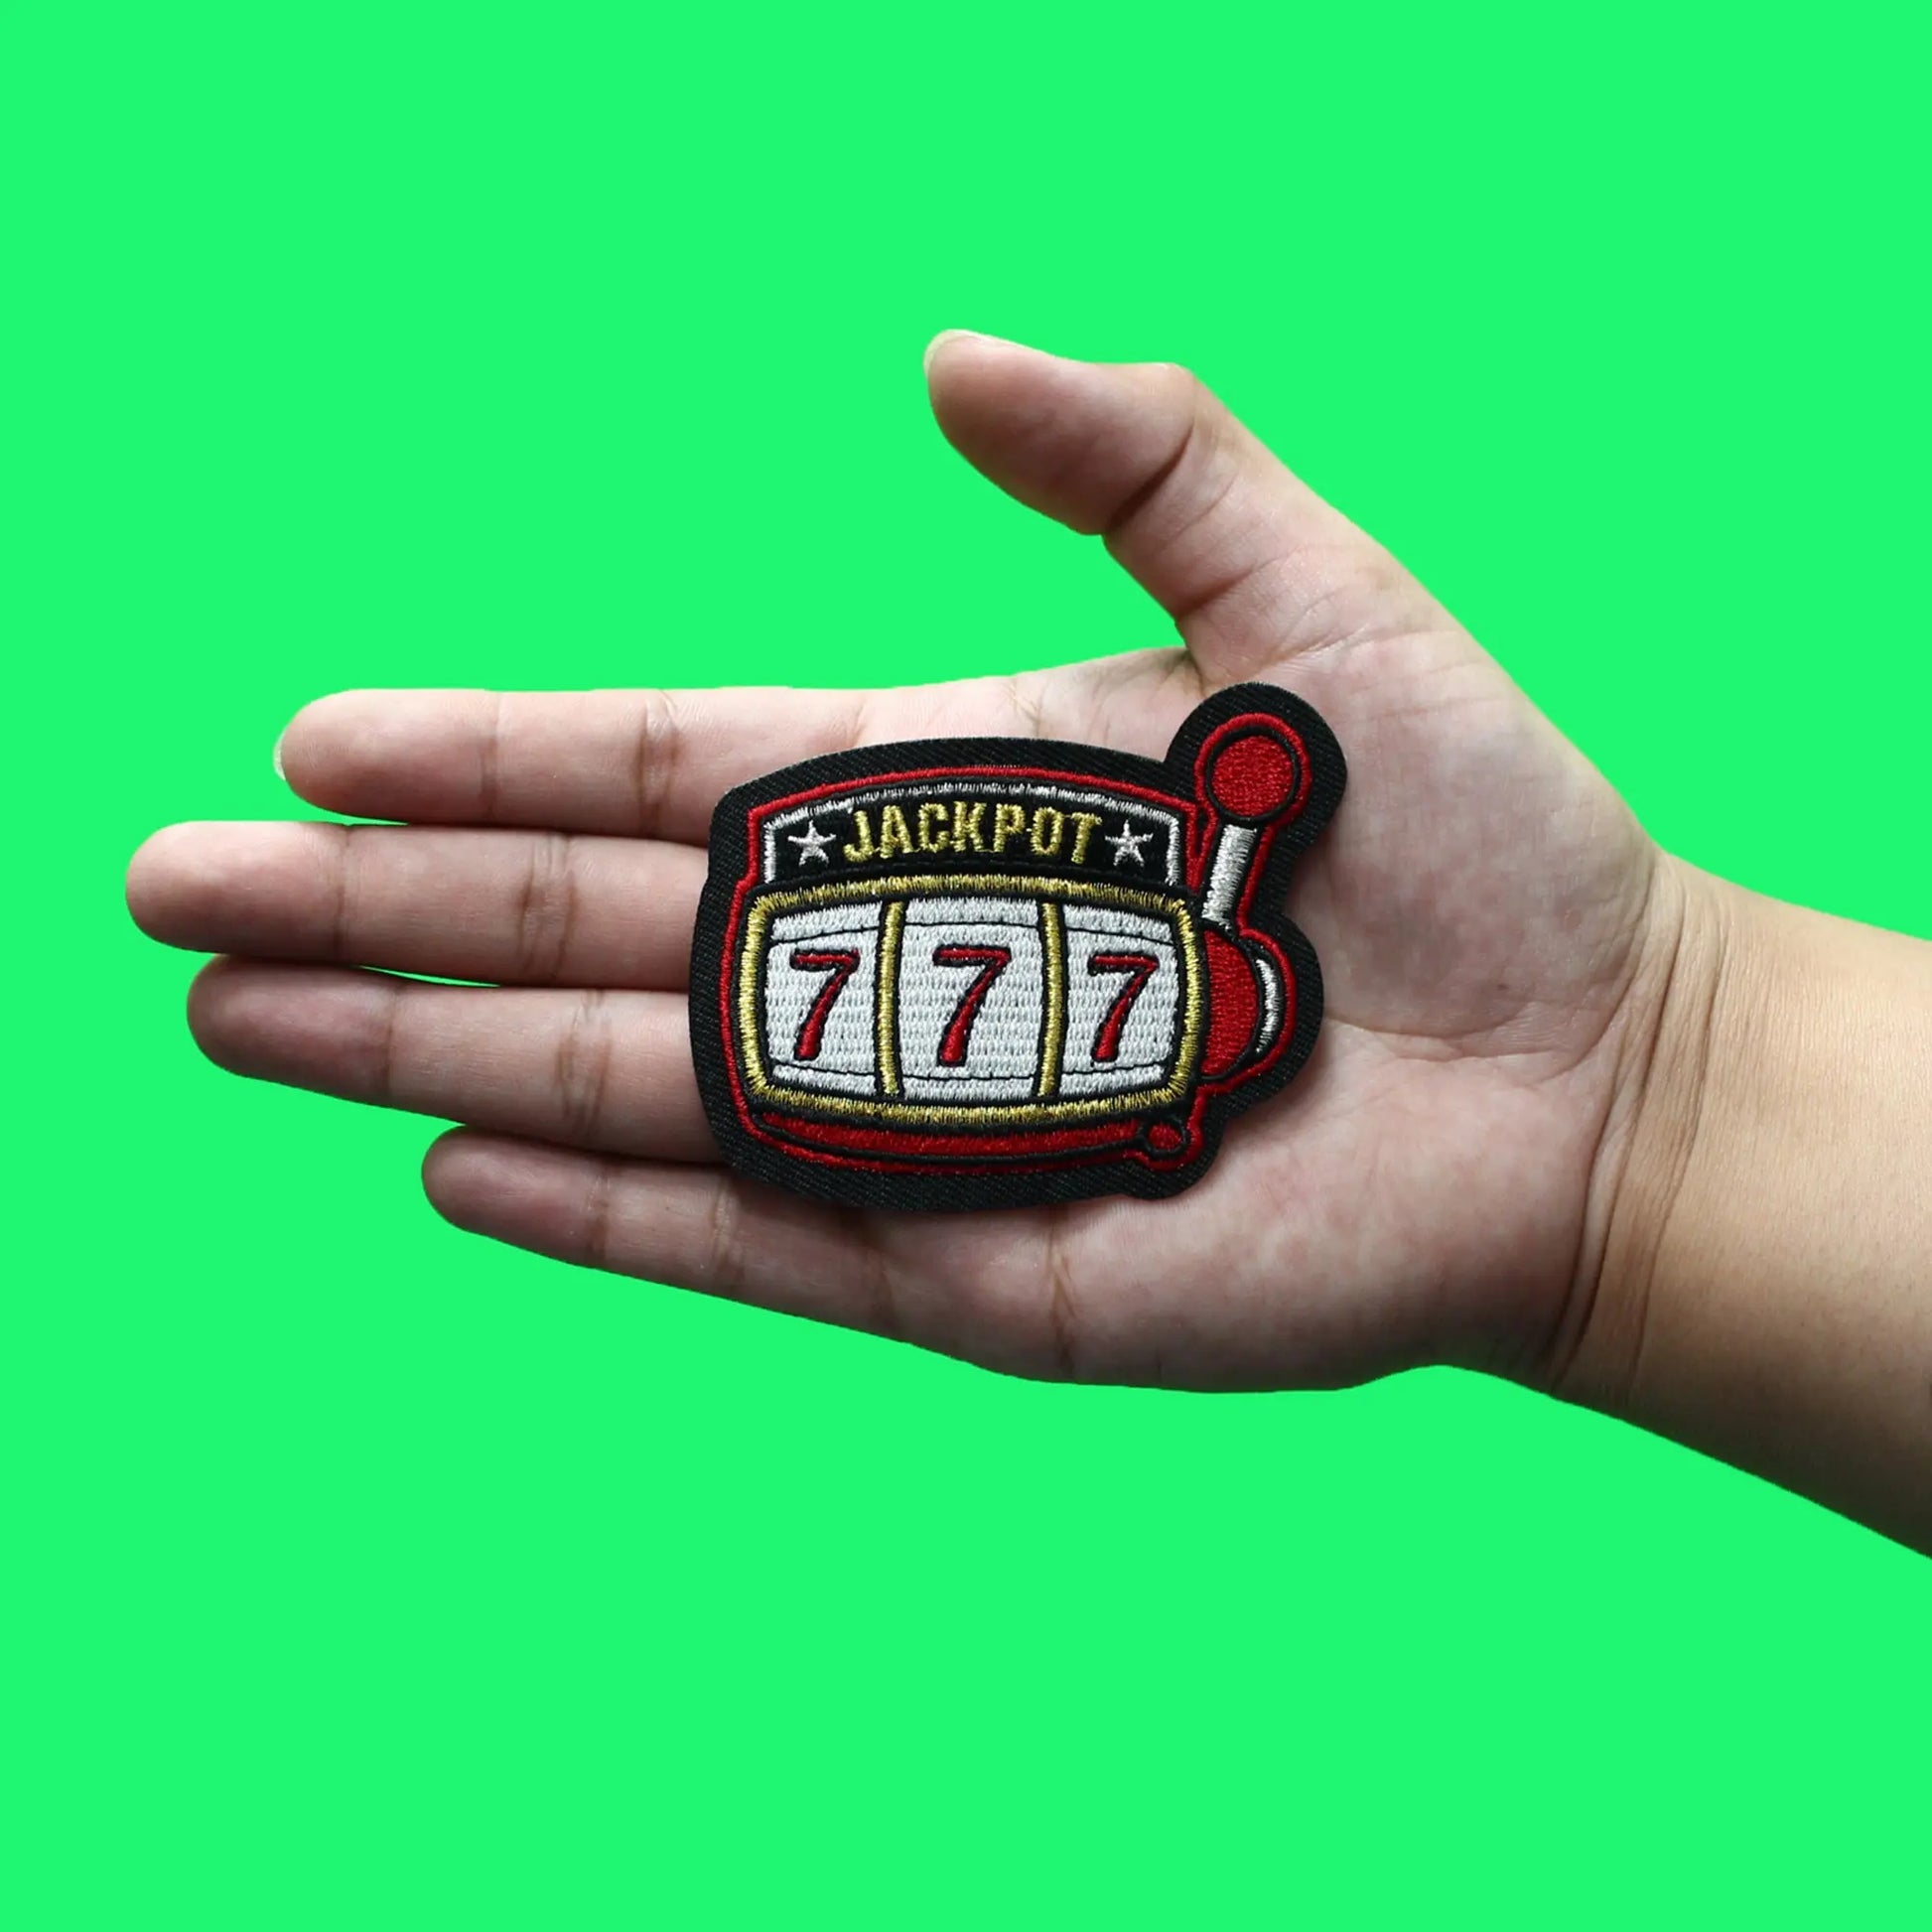 Casino Lucky Jackpot Patch Gambling 777 Vegas Embroidered Iron On